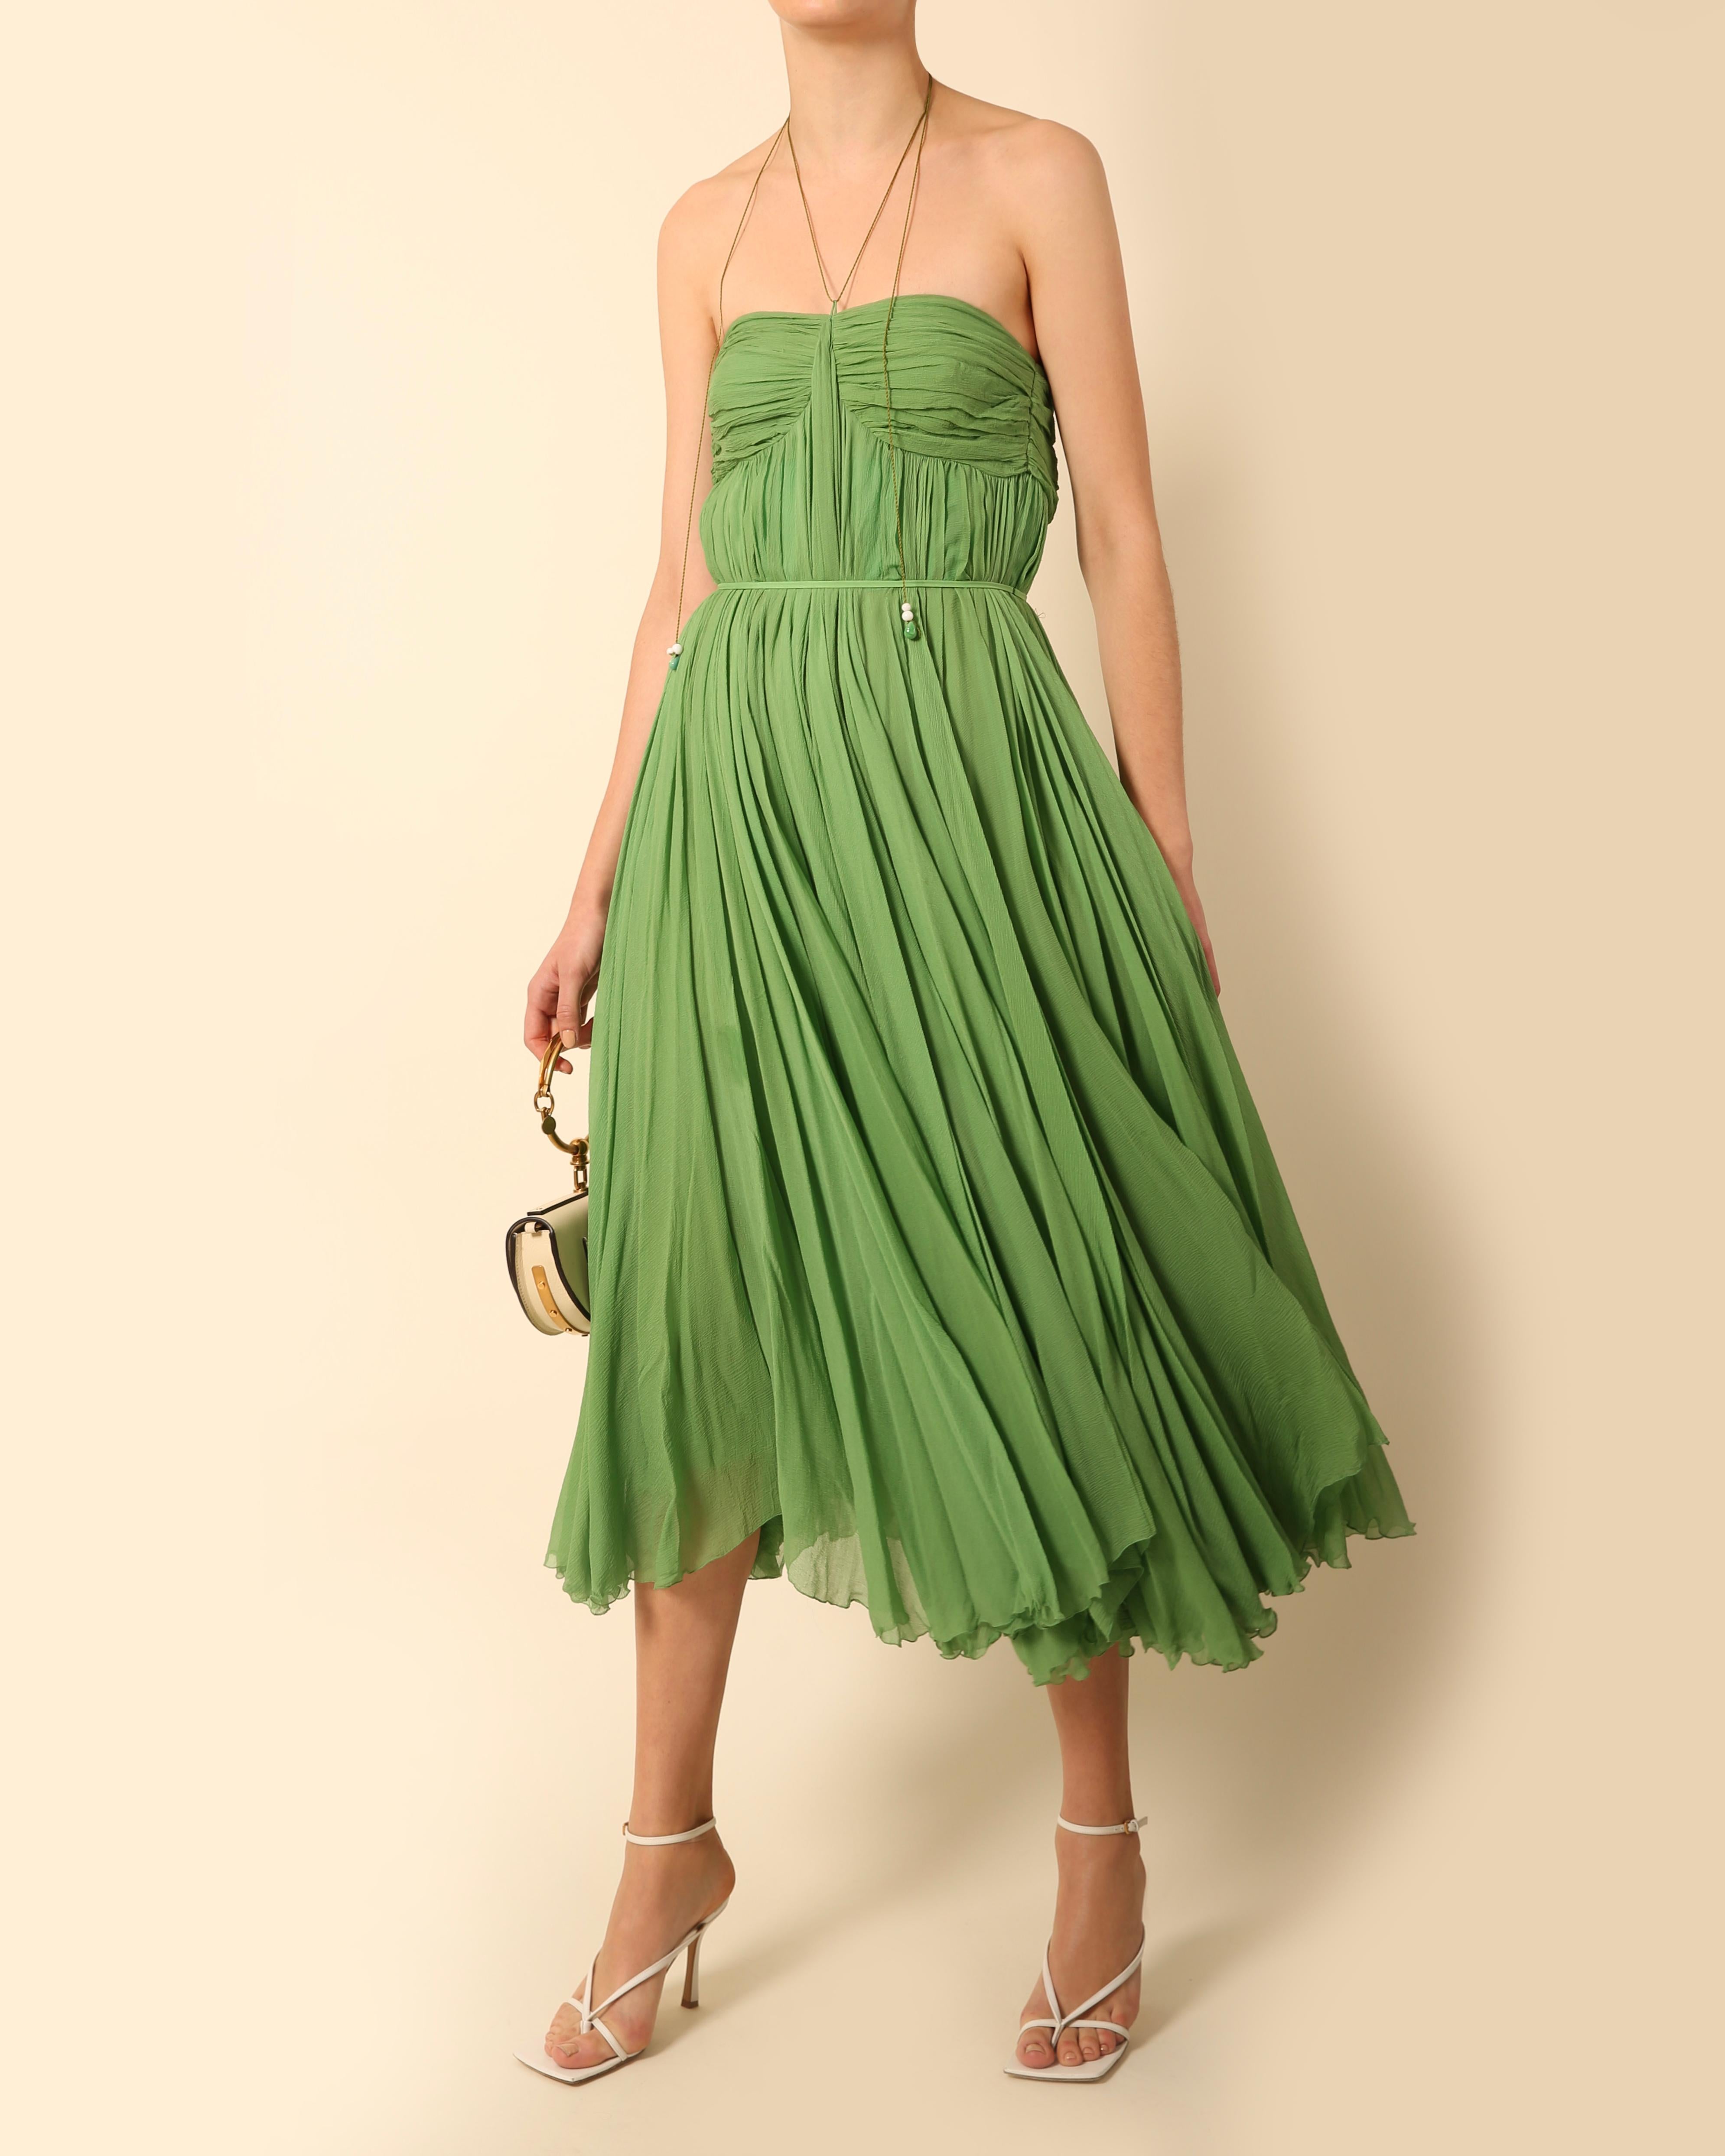 Chloe S04 strapless plisse green silk chiffon layered bustier midi length dress  For Sale 2